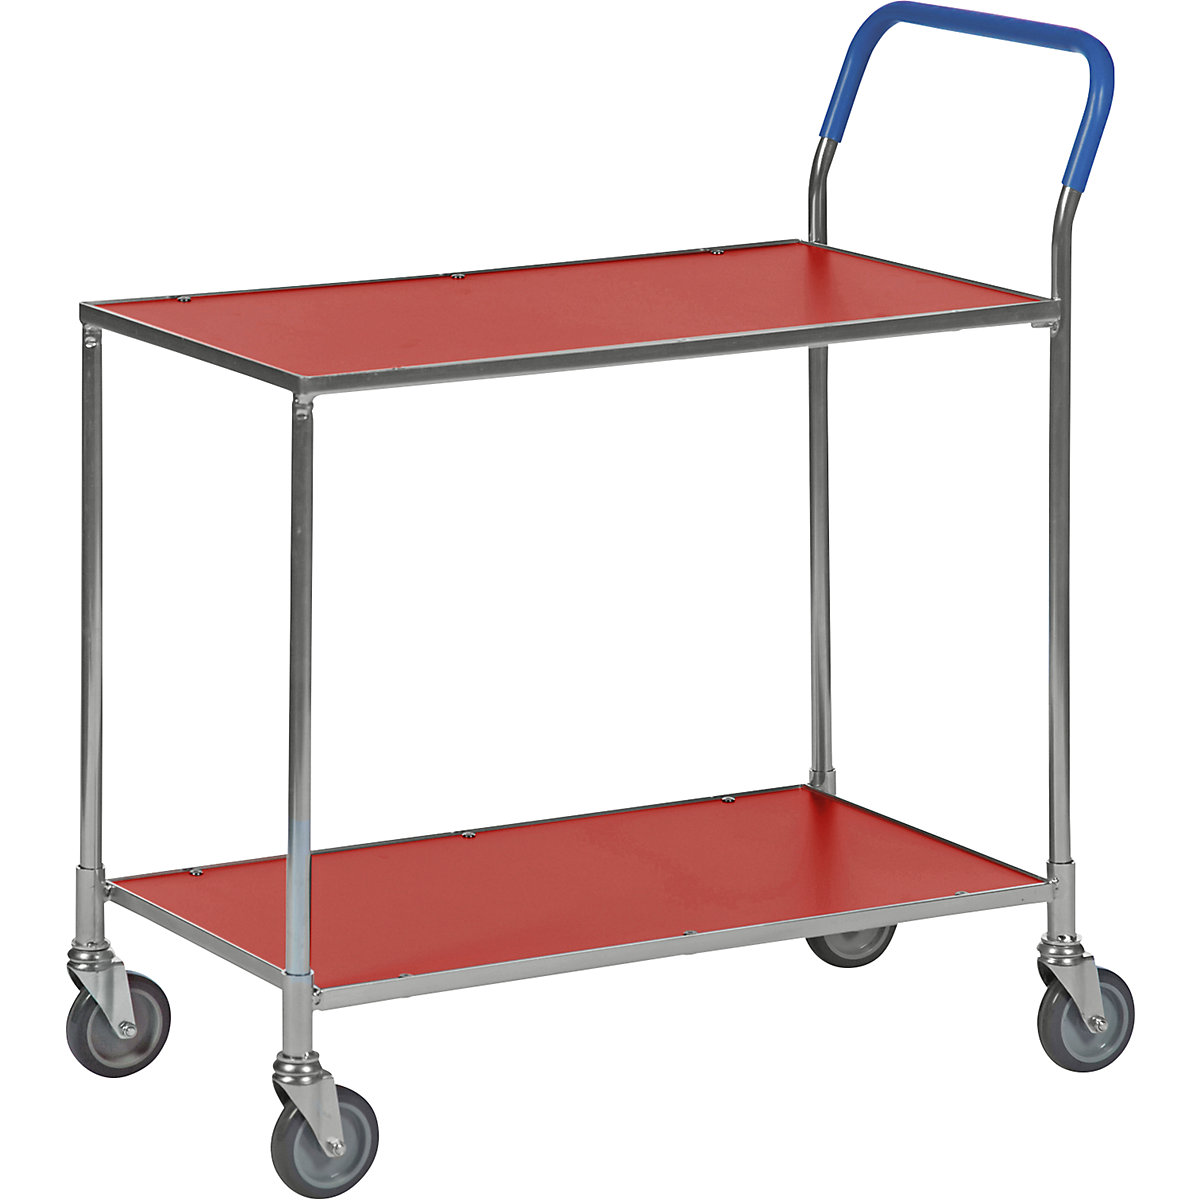 KOMFORT table trolley – Kongamek, red shelves, LxWxH 840 x 435 x 900 mm, 2+ items-13